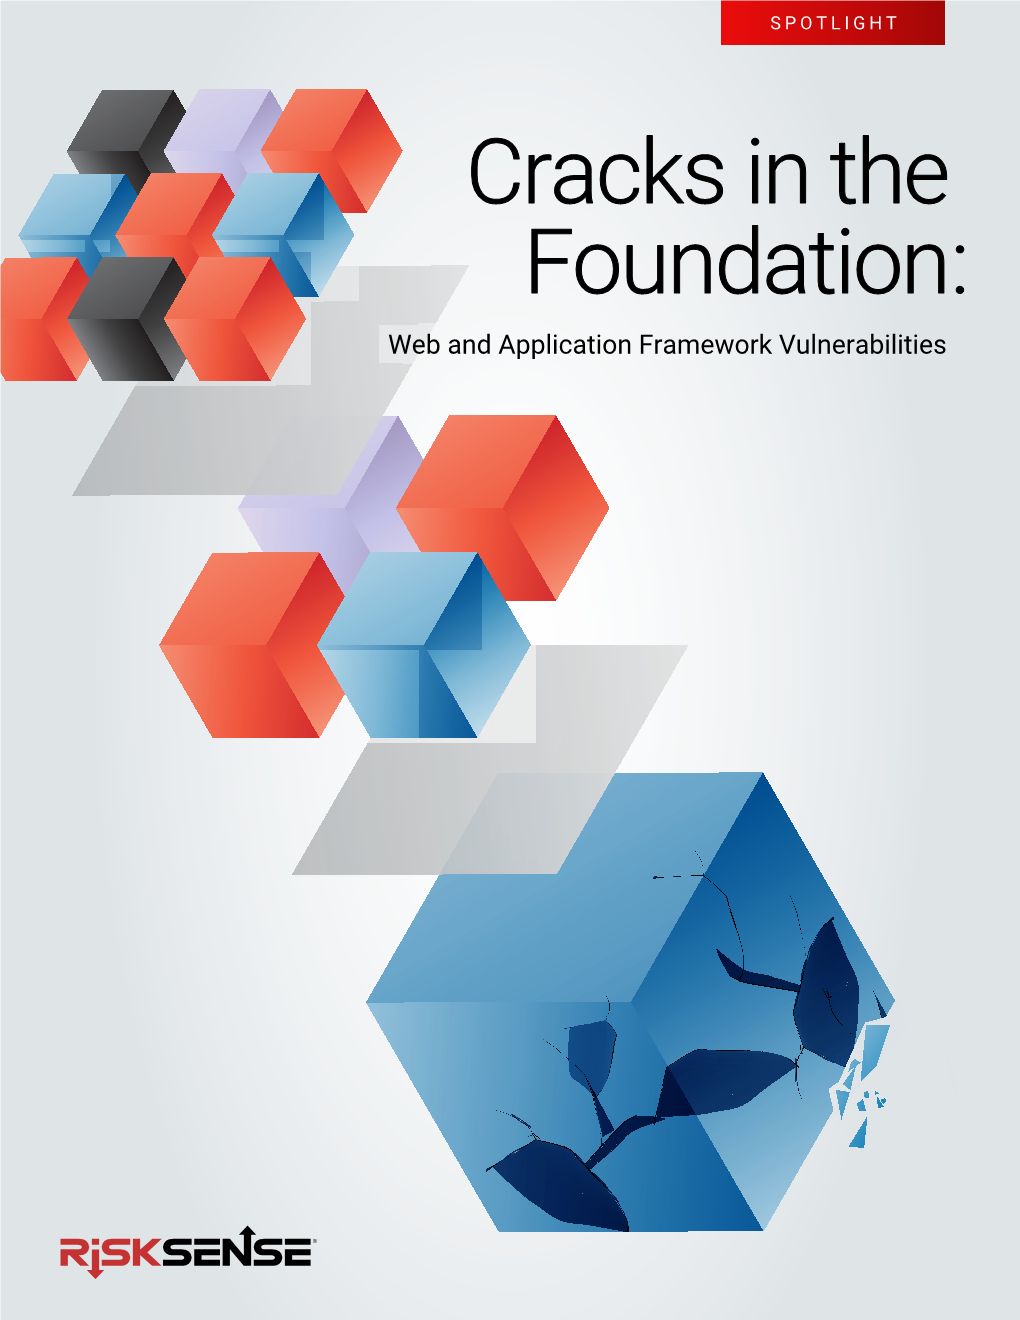 Web and Application Framework Vulnerabilities